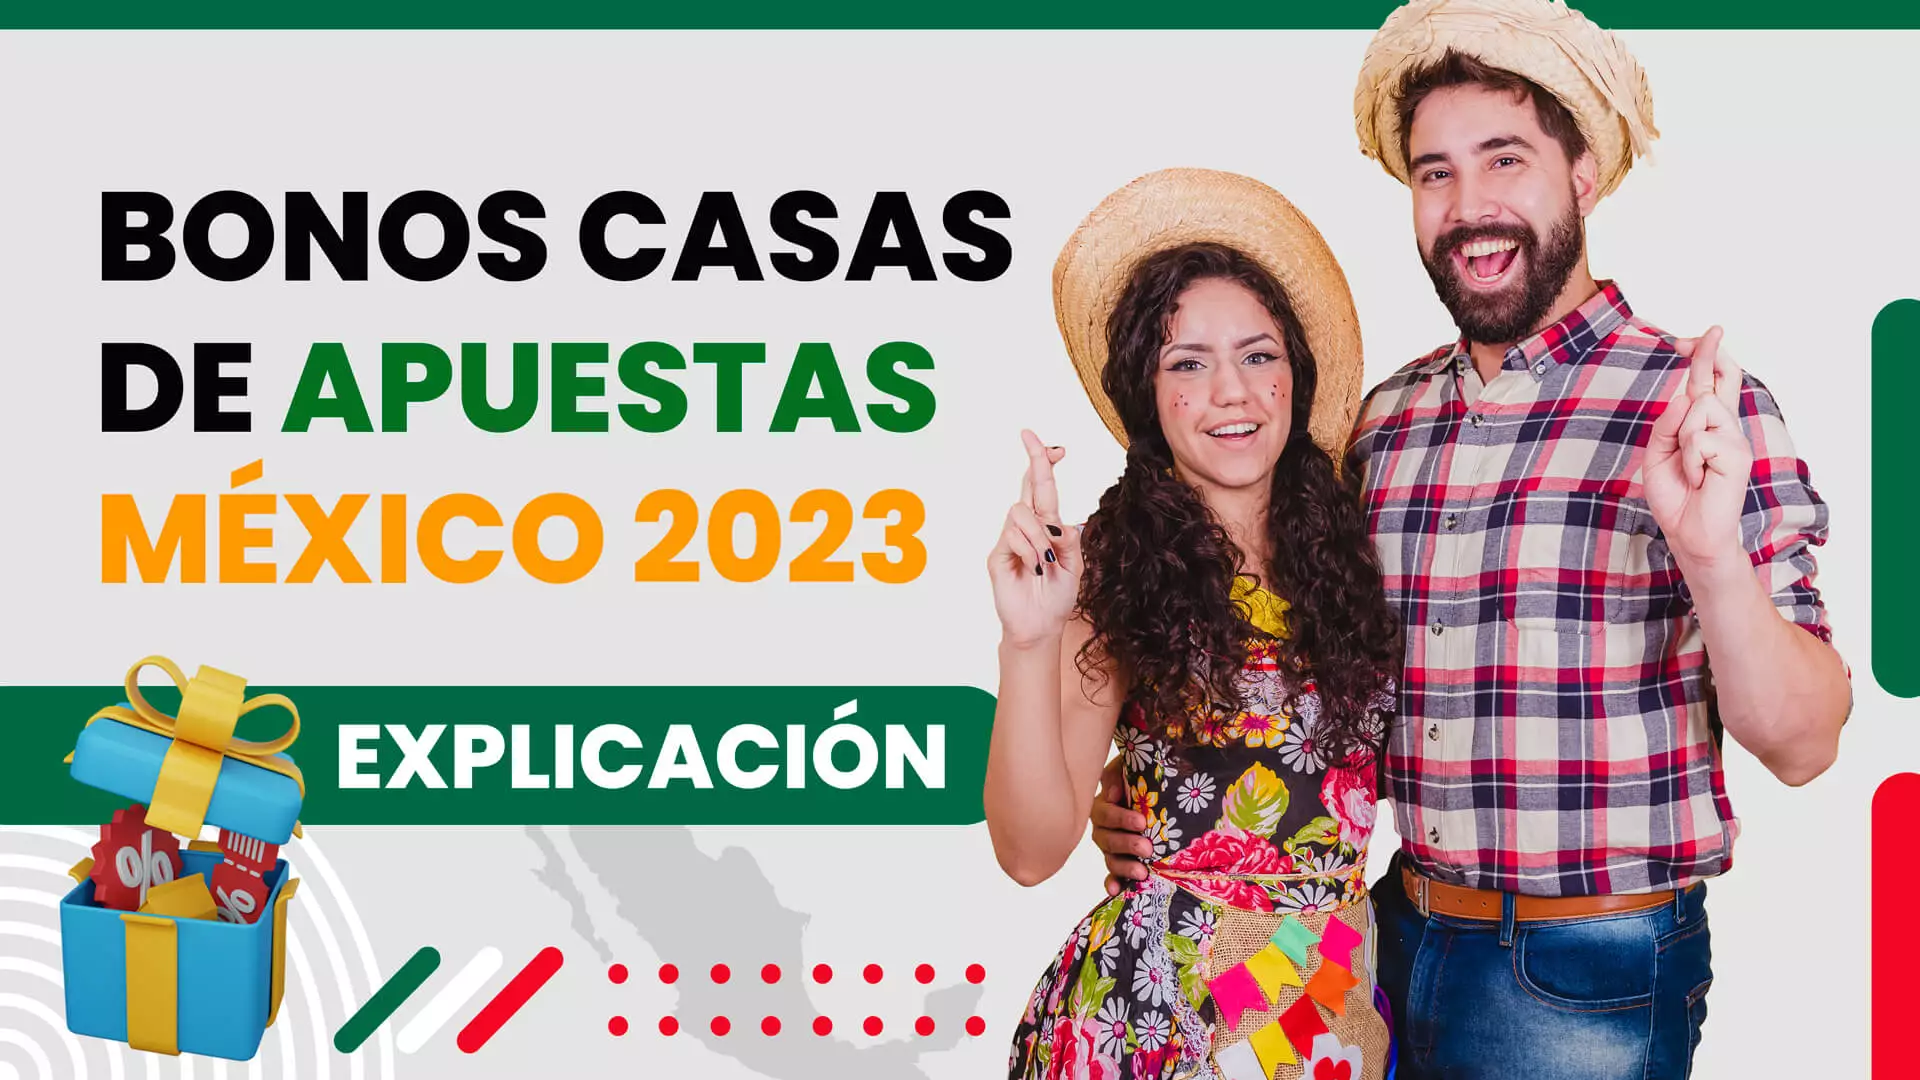 Bonos Casas de Apuestas México 2023 - Explicación